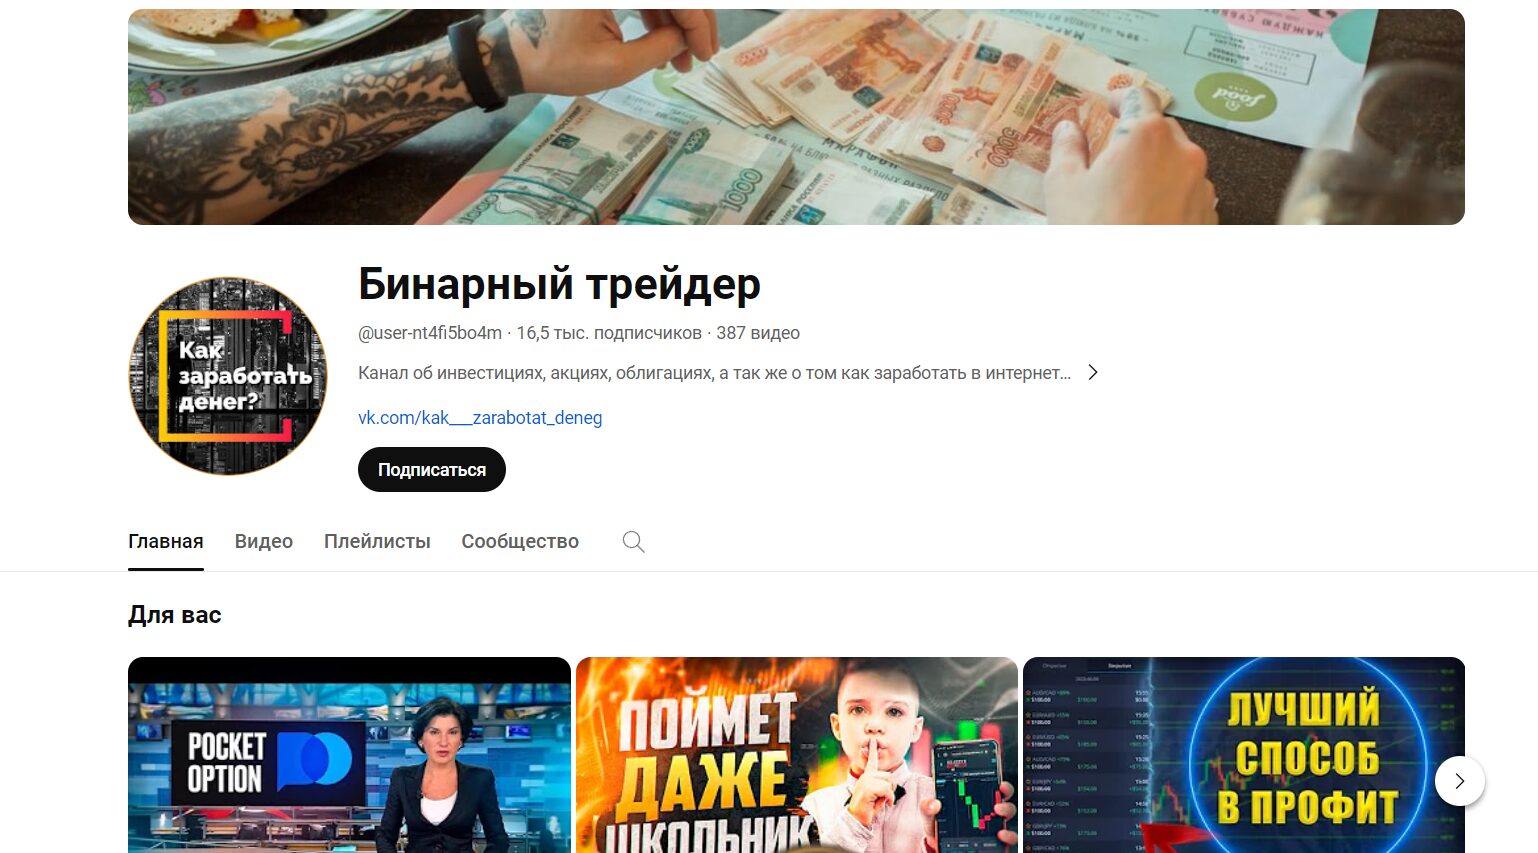 Бинарный трейдер Ютуб-канал